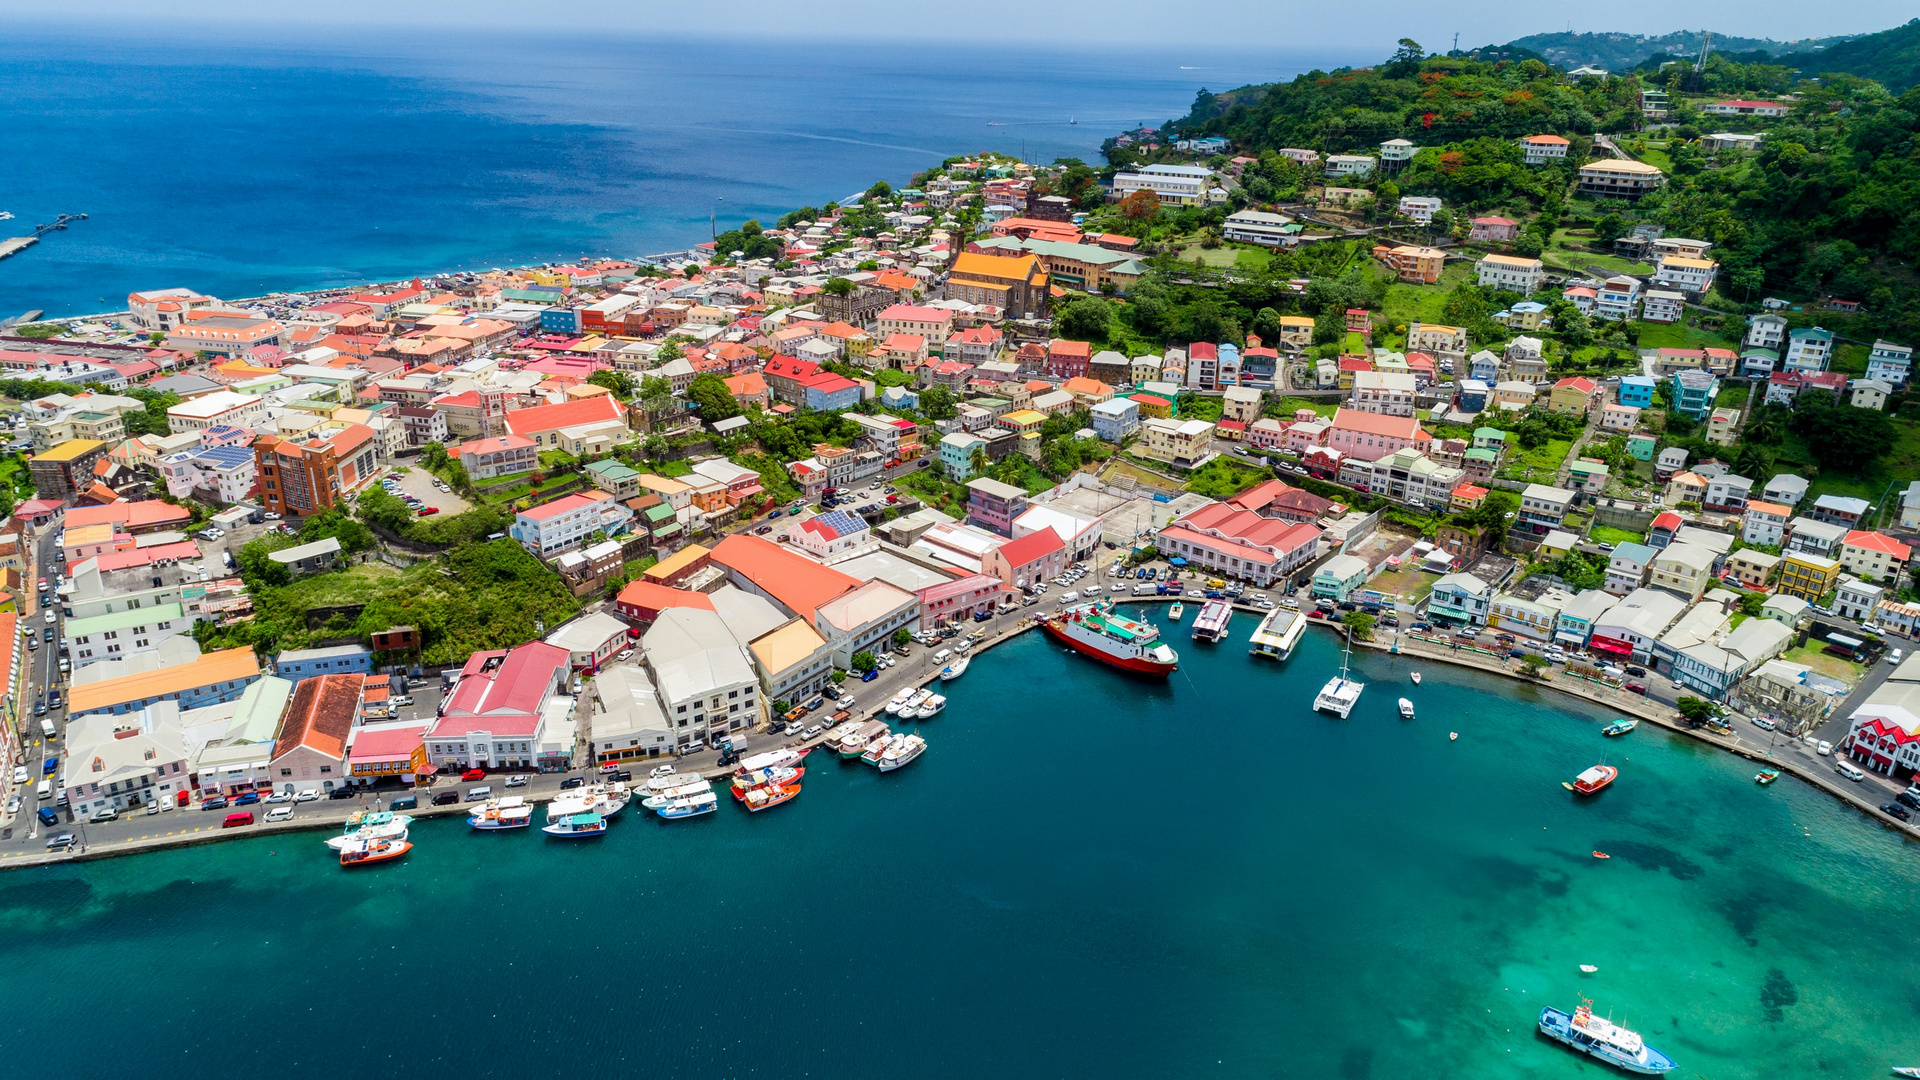 St. George's Grenada, Country profile, Confidus Solutions, Travel, 1920x1080 Full HD Desktop